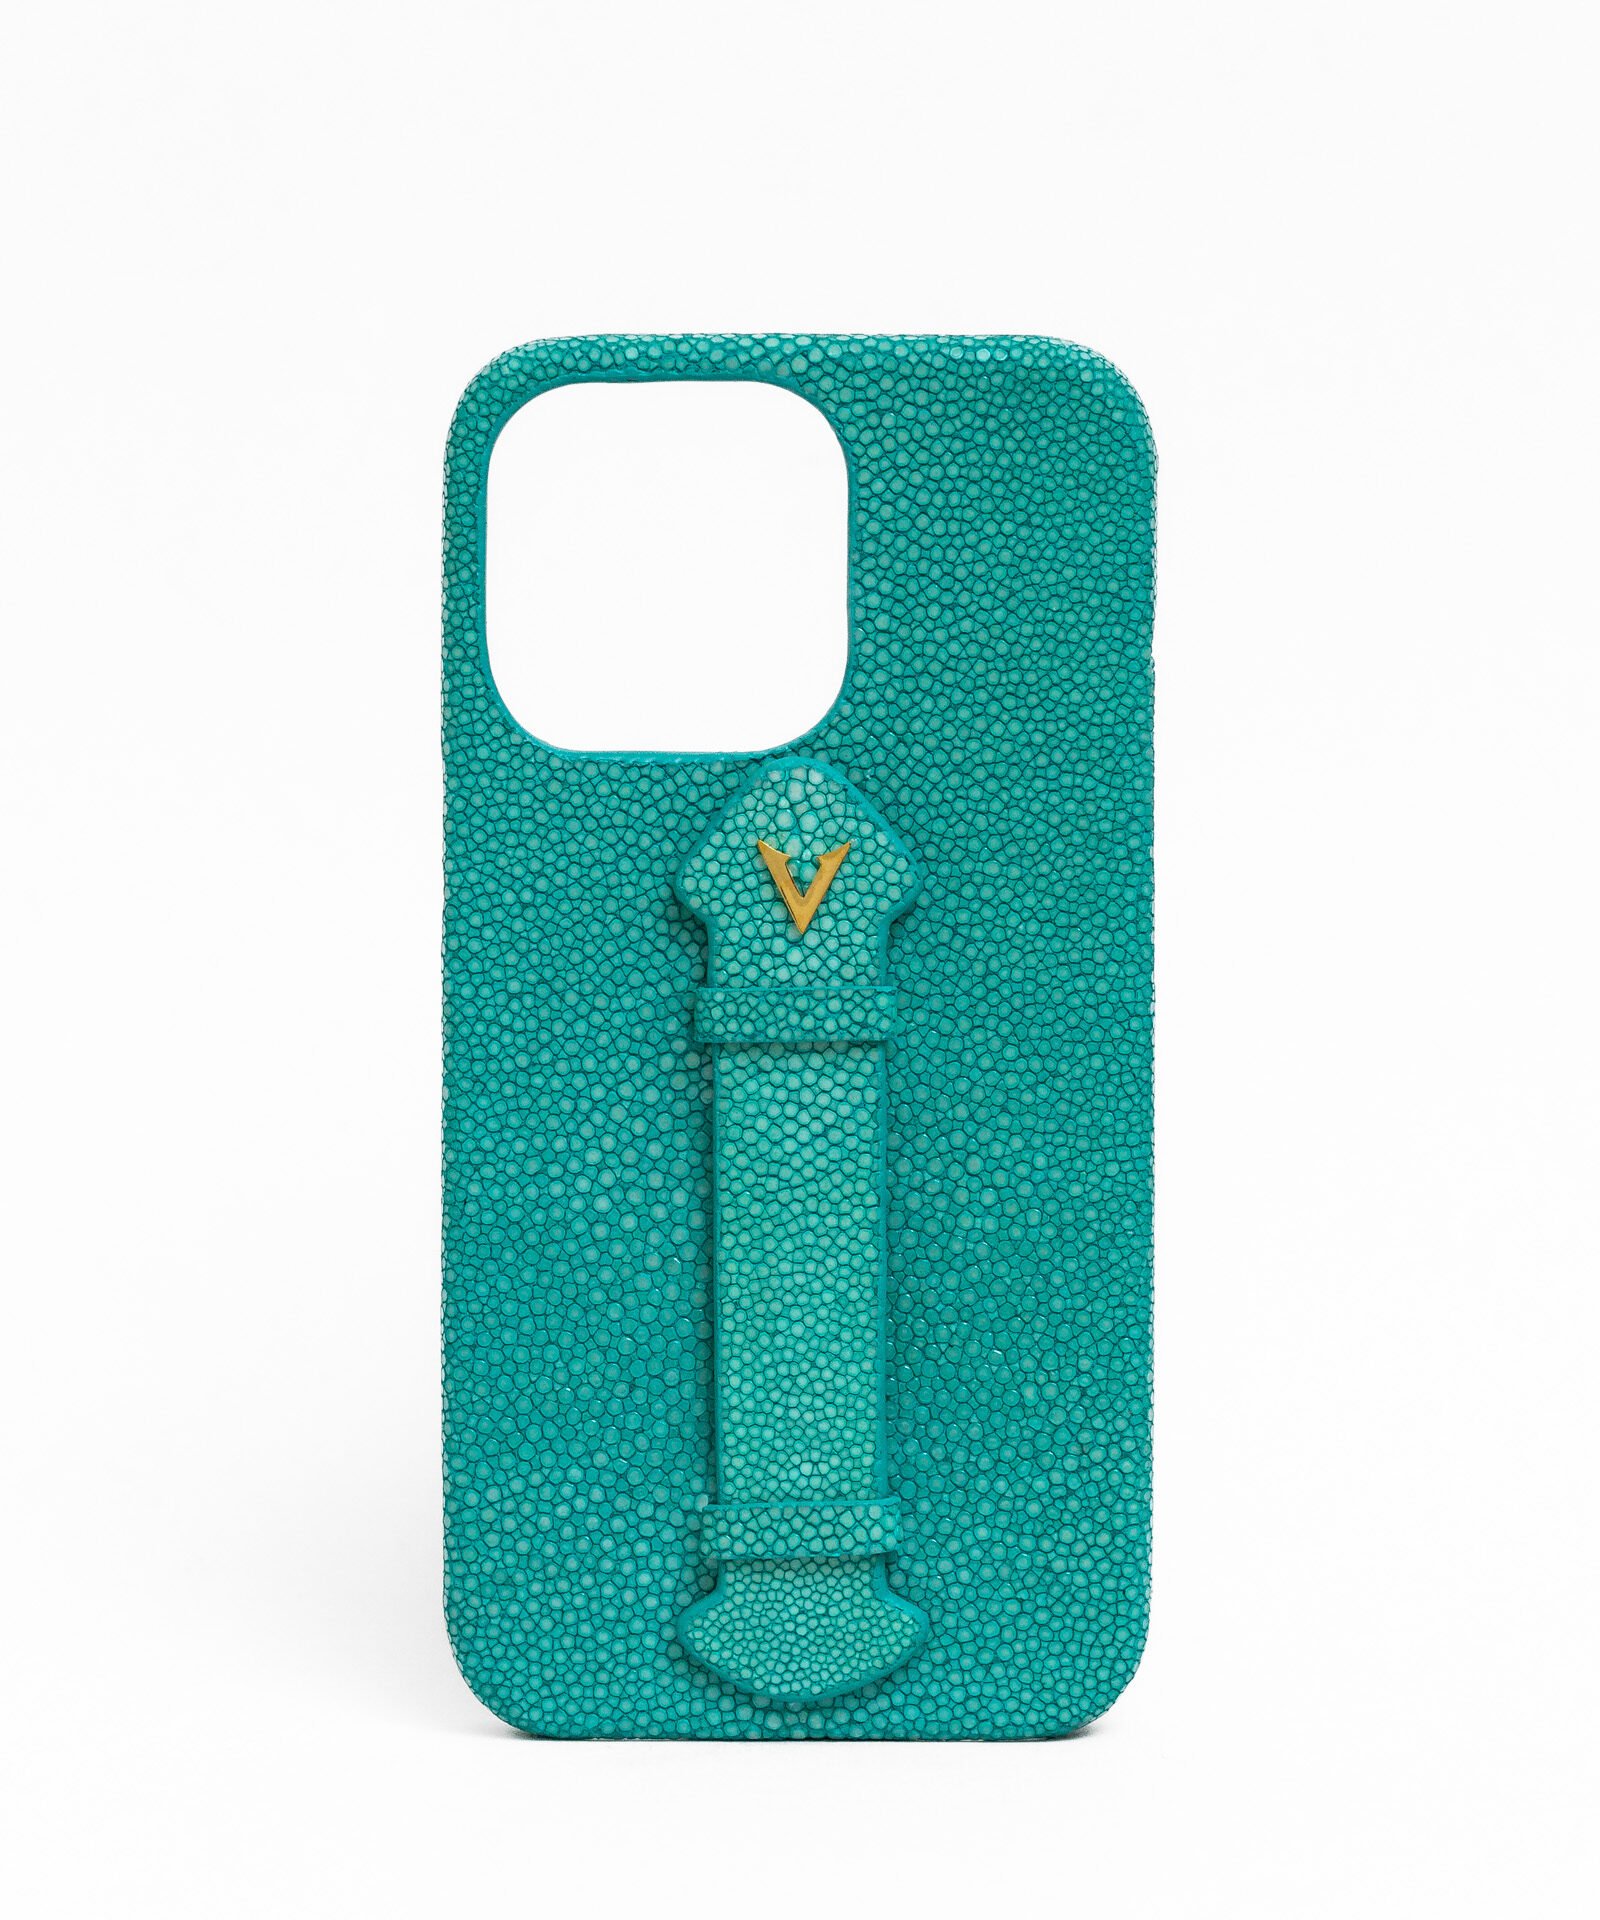 Vascari Turquoise Stingray finger holder Leather Case